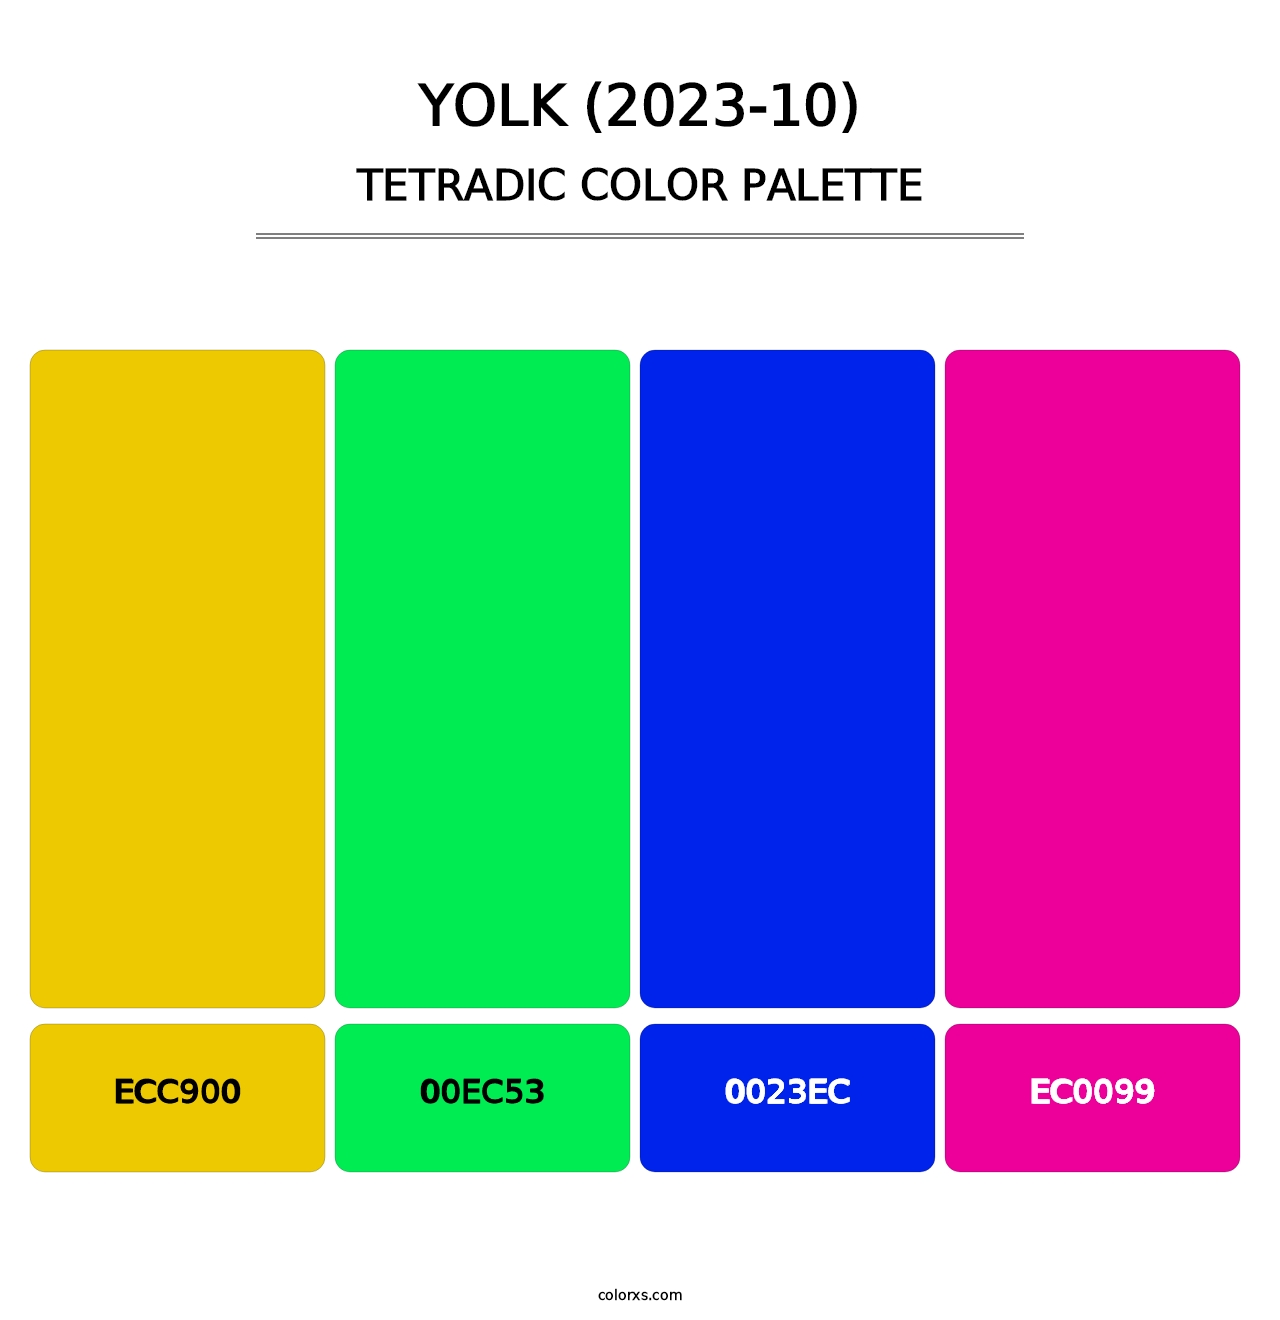 Yolk (2023-10) - Tetradic Color Palette